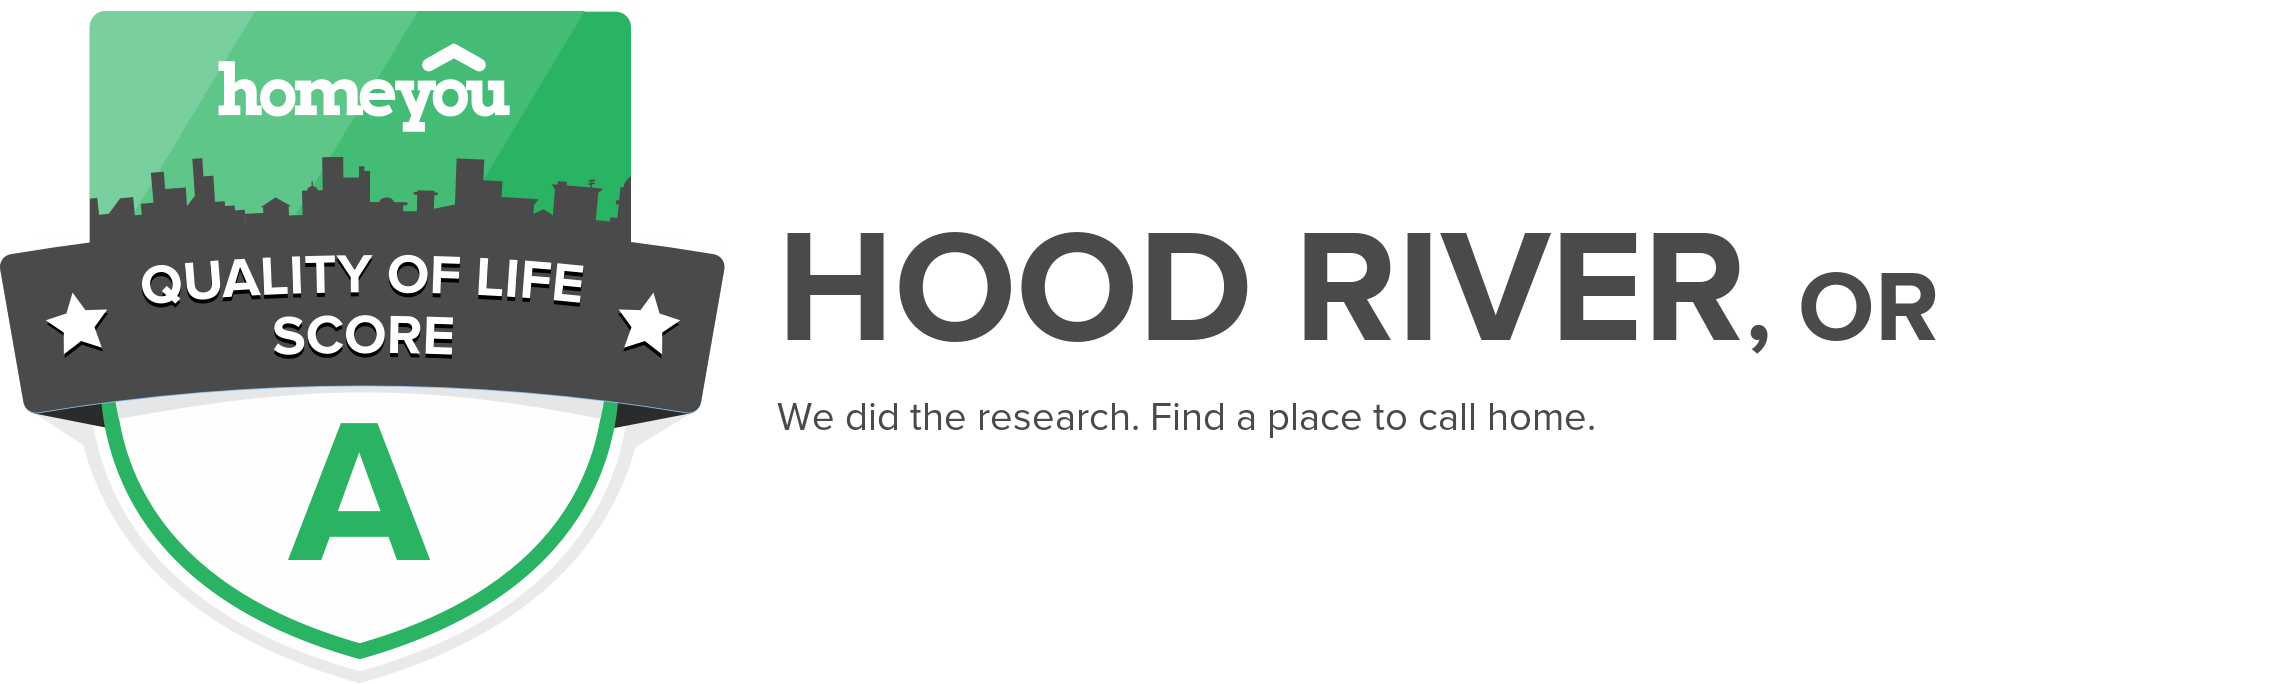 Hood River, OR